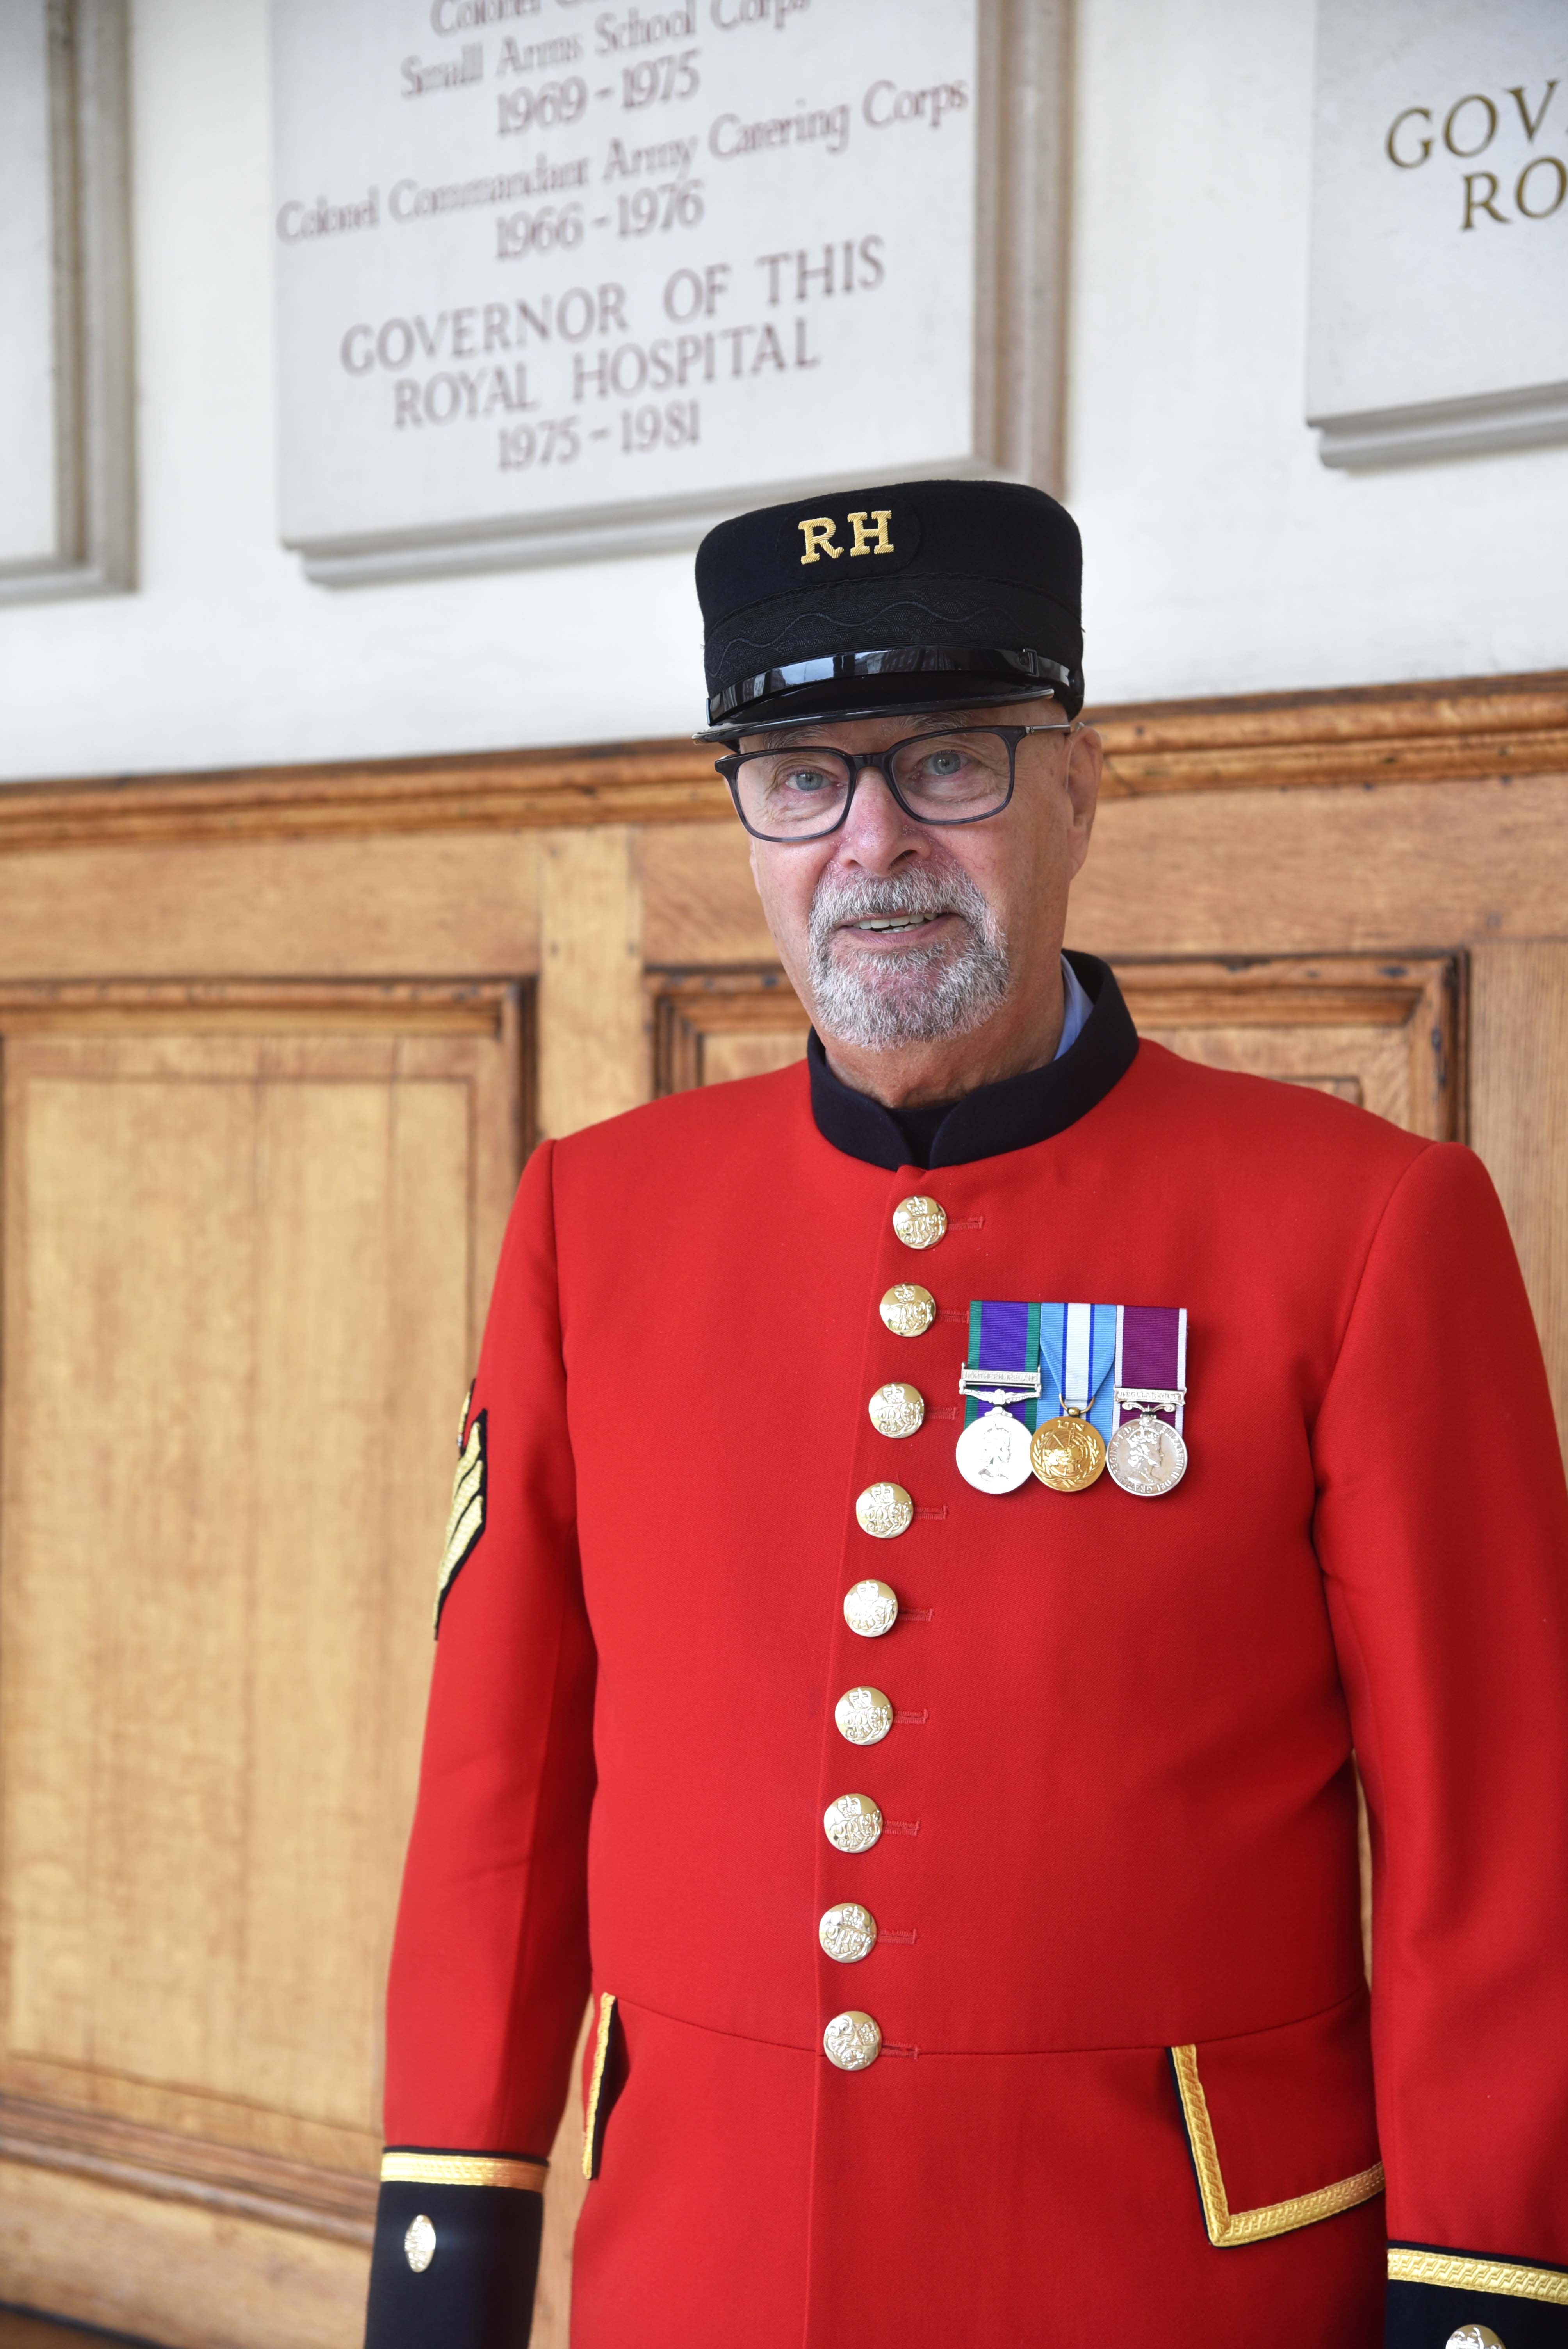 Chelsea Pensioner Barry Harman in scarlet uniform